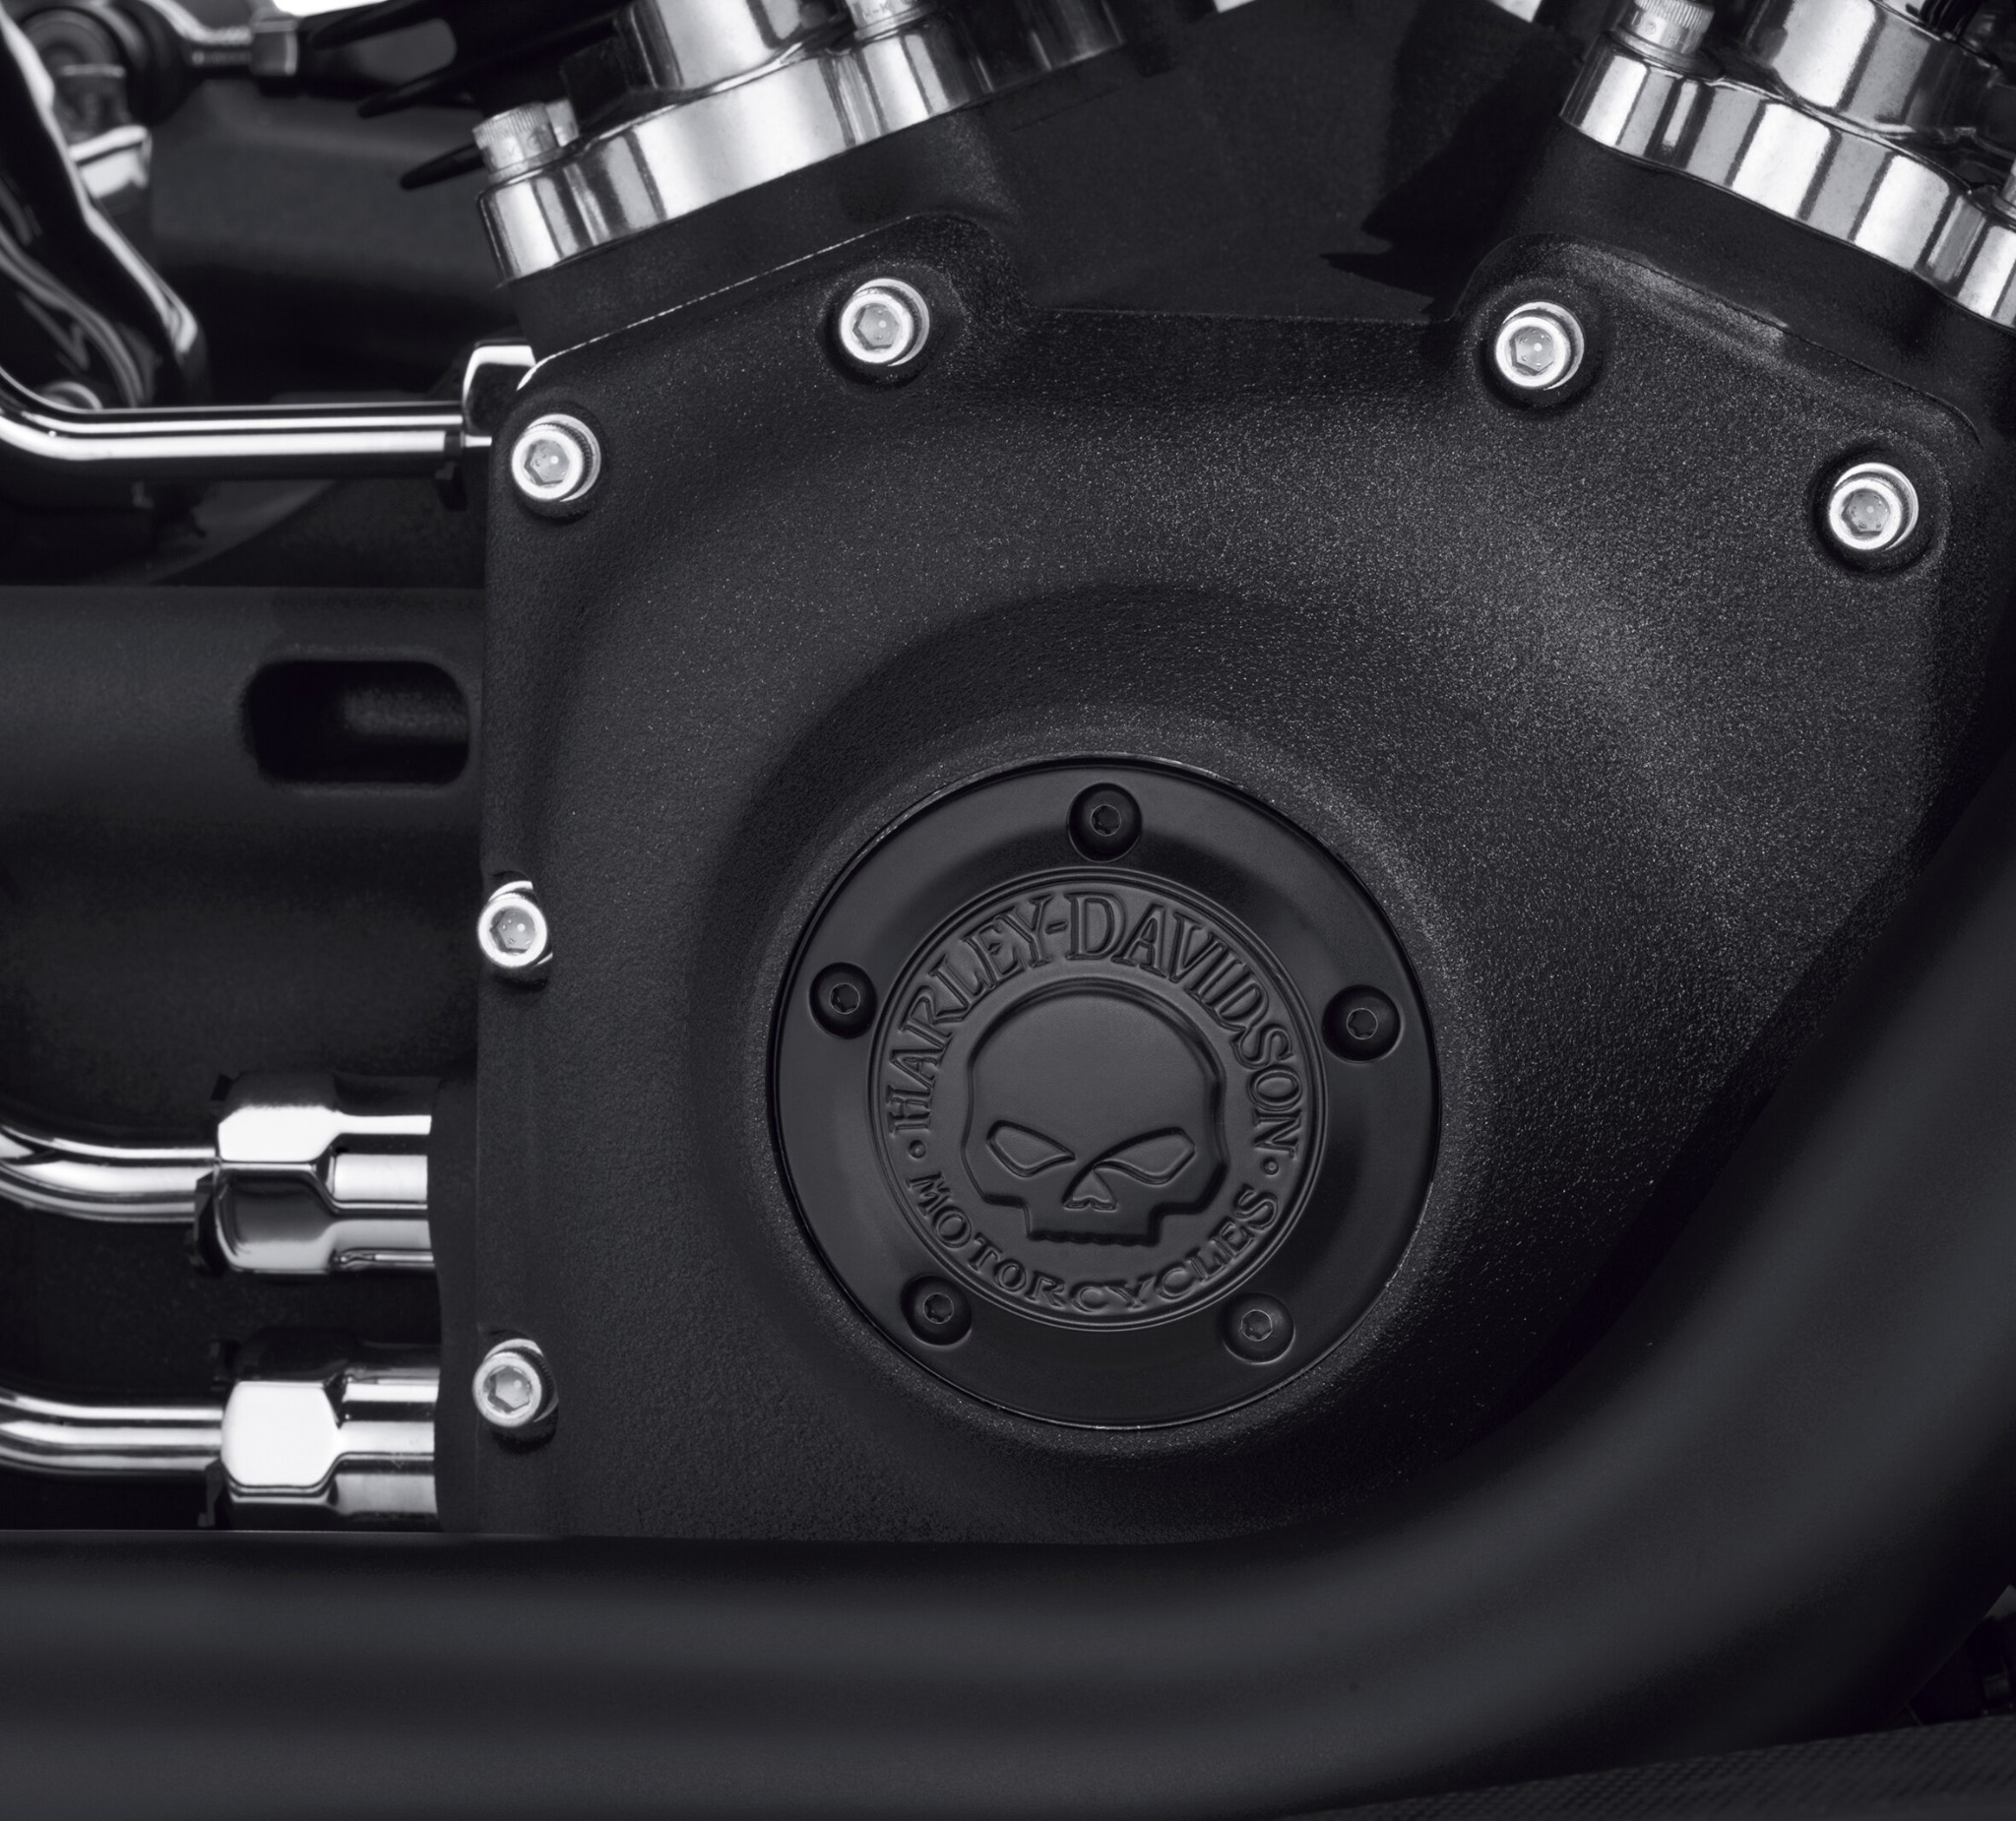 Harley Davidson timing cover screw set.